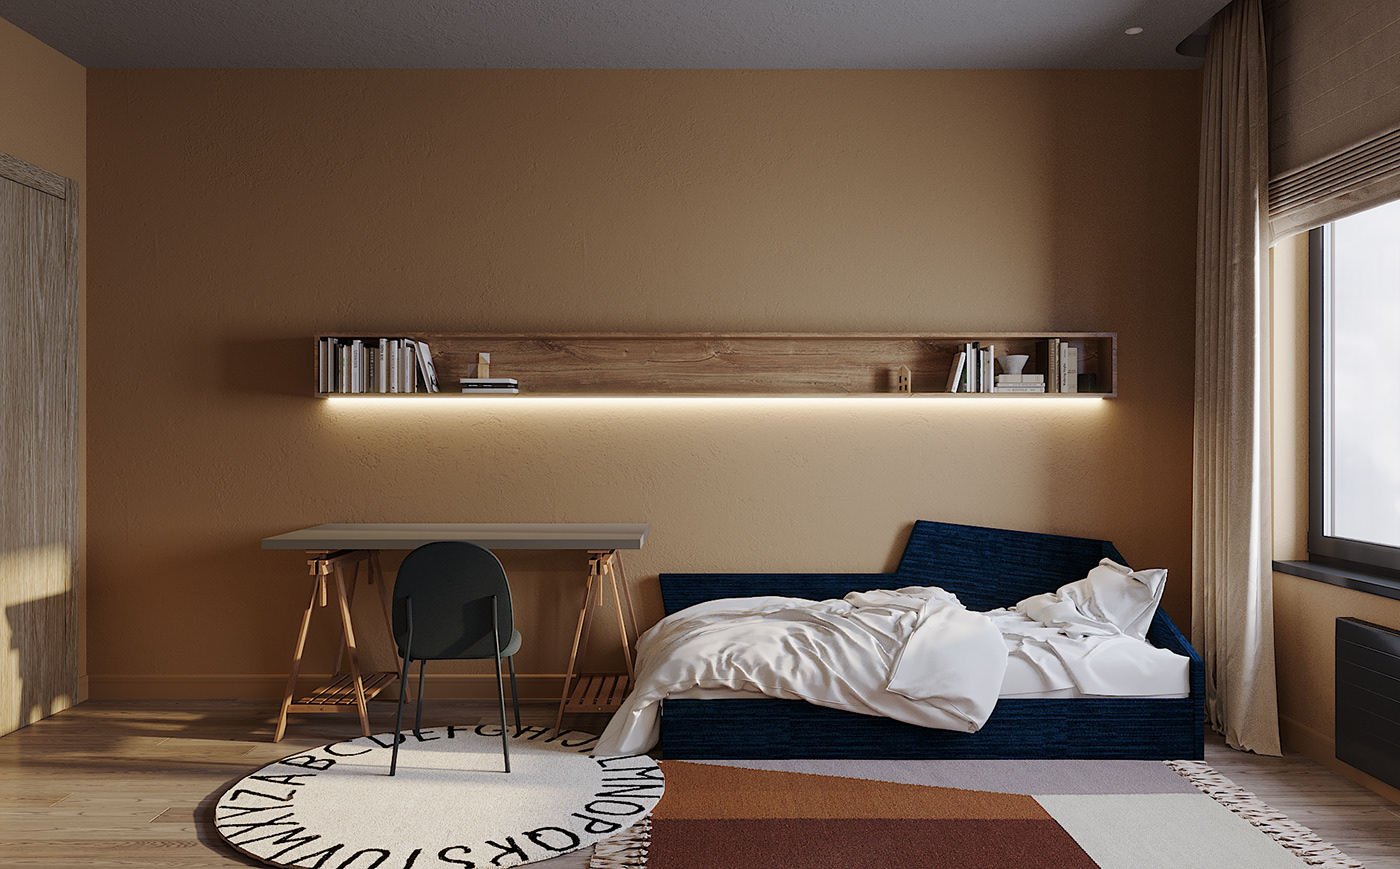 3D 3dsmax corona render  interior design  interiordesign Render visualization